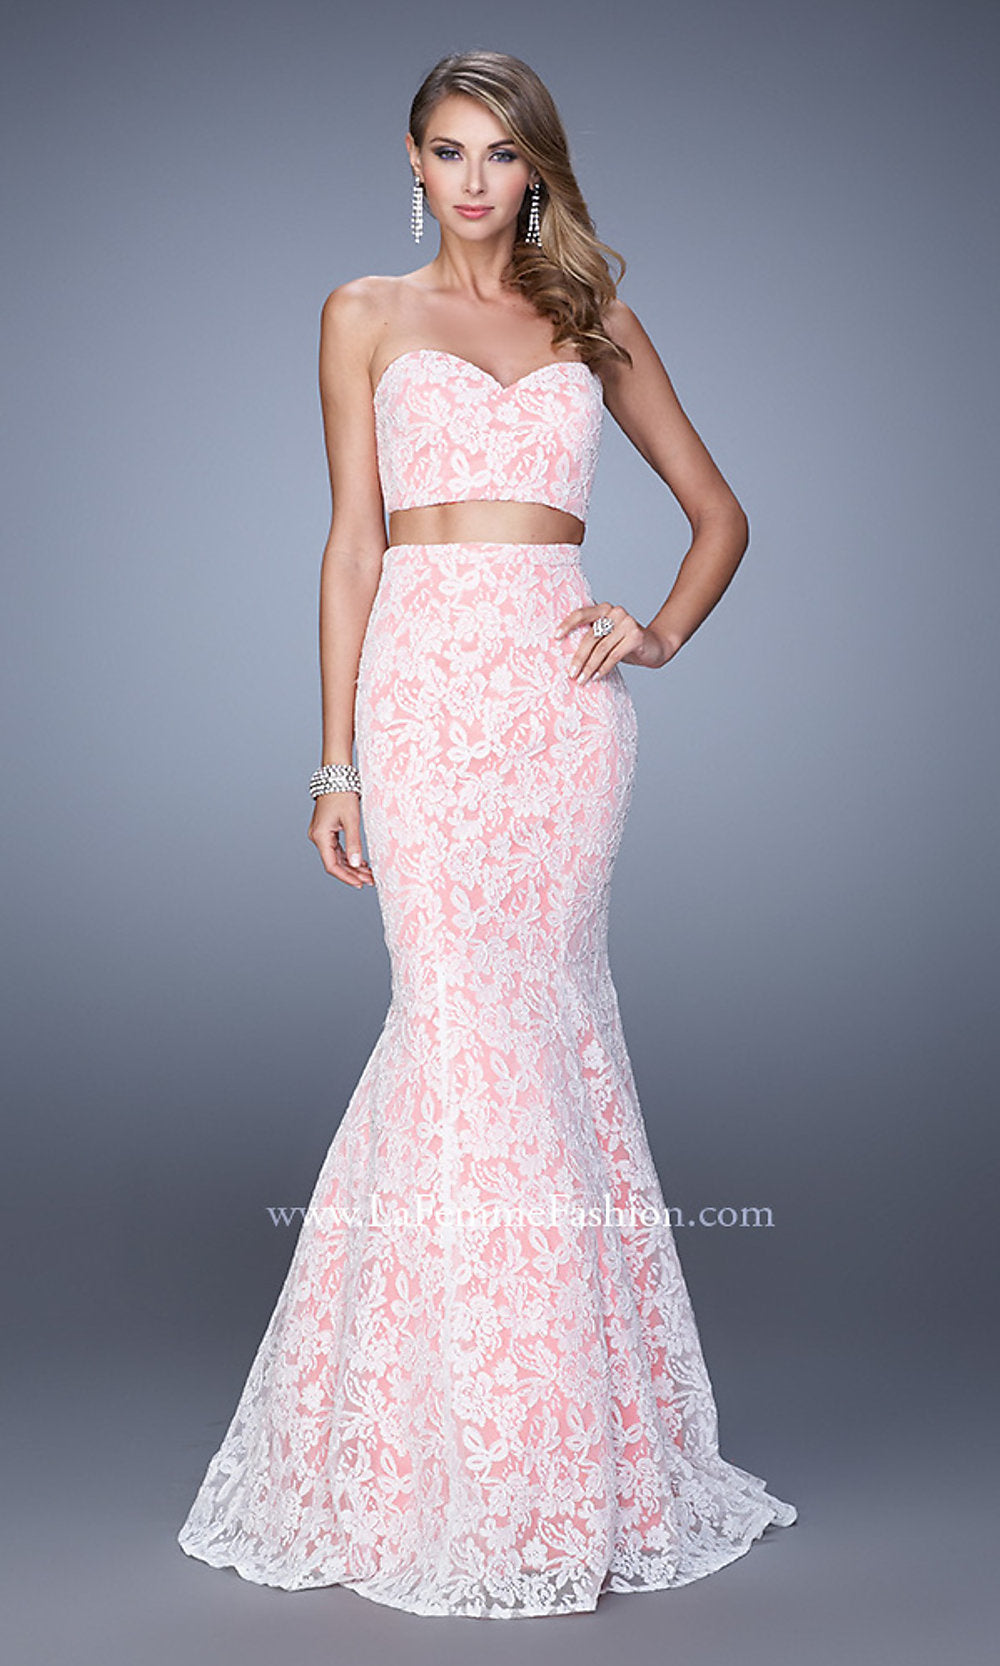 Two-Piece Long Lace Prom Dress by La Femme